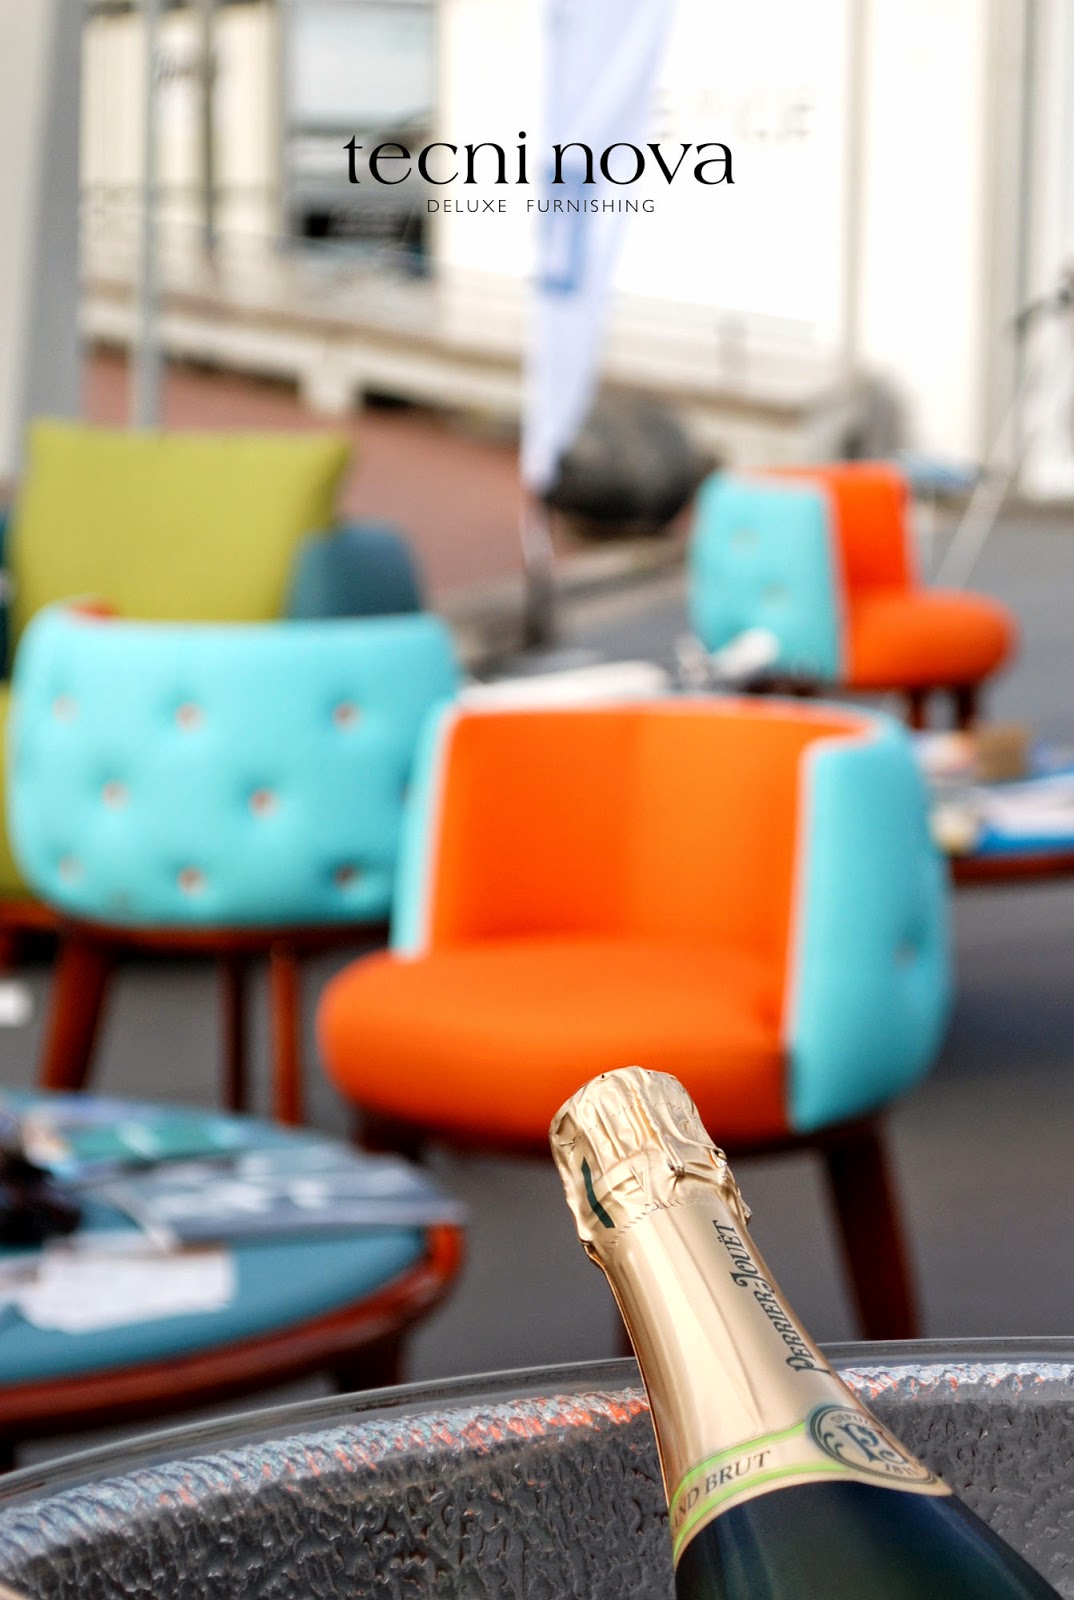 tecninova-outdoor-deluxe-luxury-furnishing-chester-capitone-sail-saling-mobiliario-exterior-nautico-telas-exteriores-fabrics-water-resistant-nautical-luxury-yatch-salon-nautico-barcelona-2014-thecooluxury-luxury-lifestyle-millionaire-houses-pool-upholstery-armchair-chair-table-pedestal-swivel-bright-colours-seafloor-sea-ocean-colours-turquoise